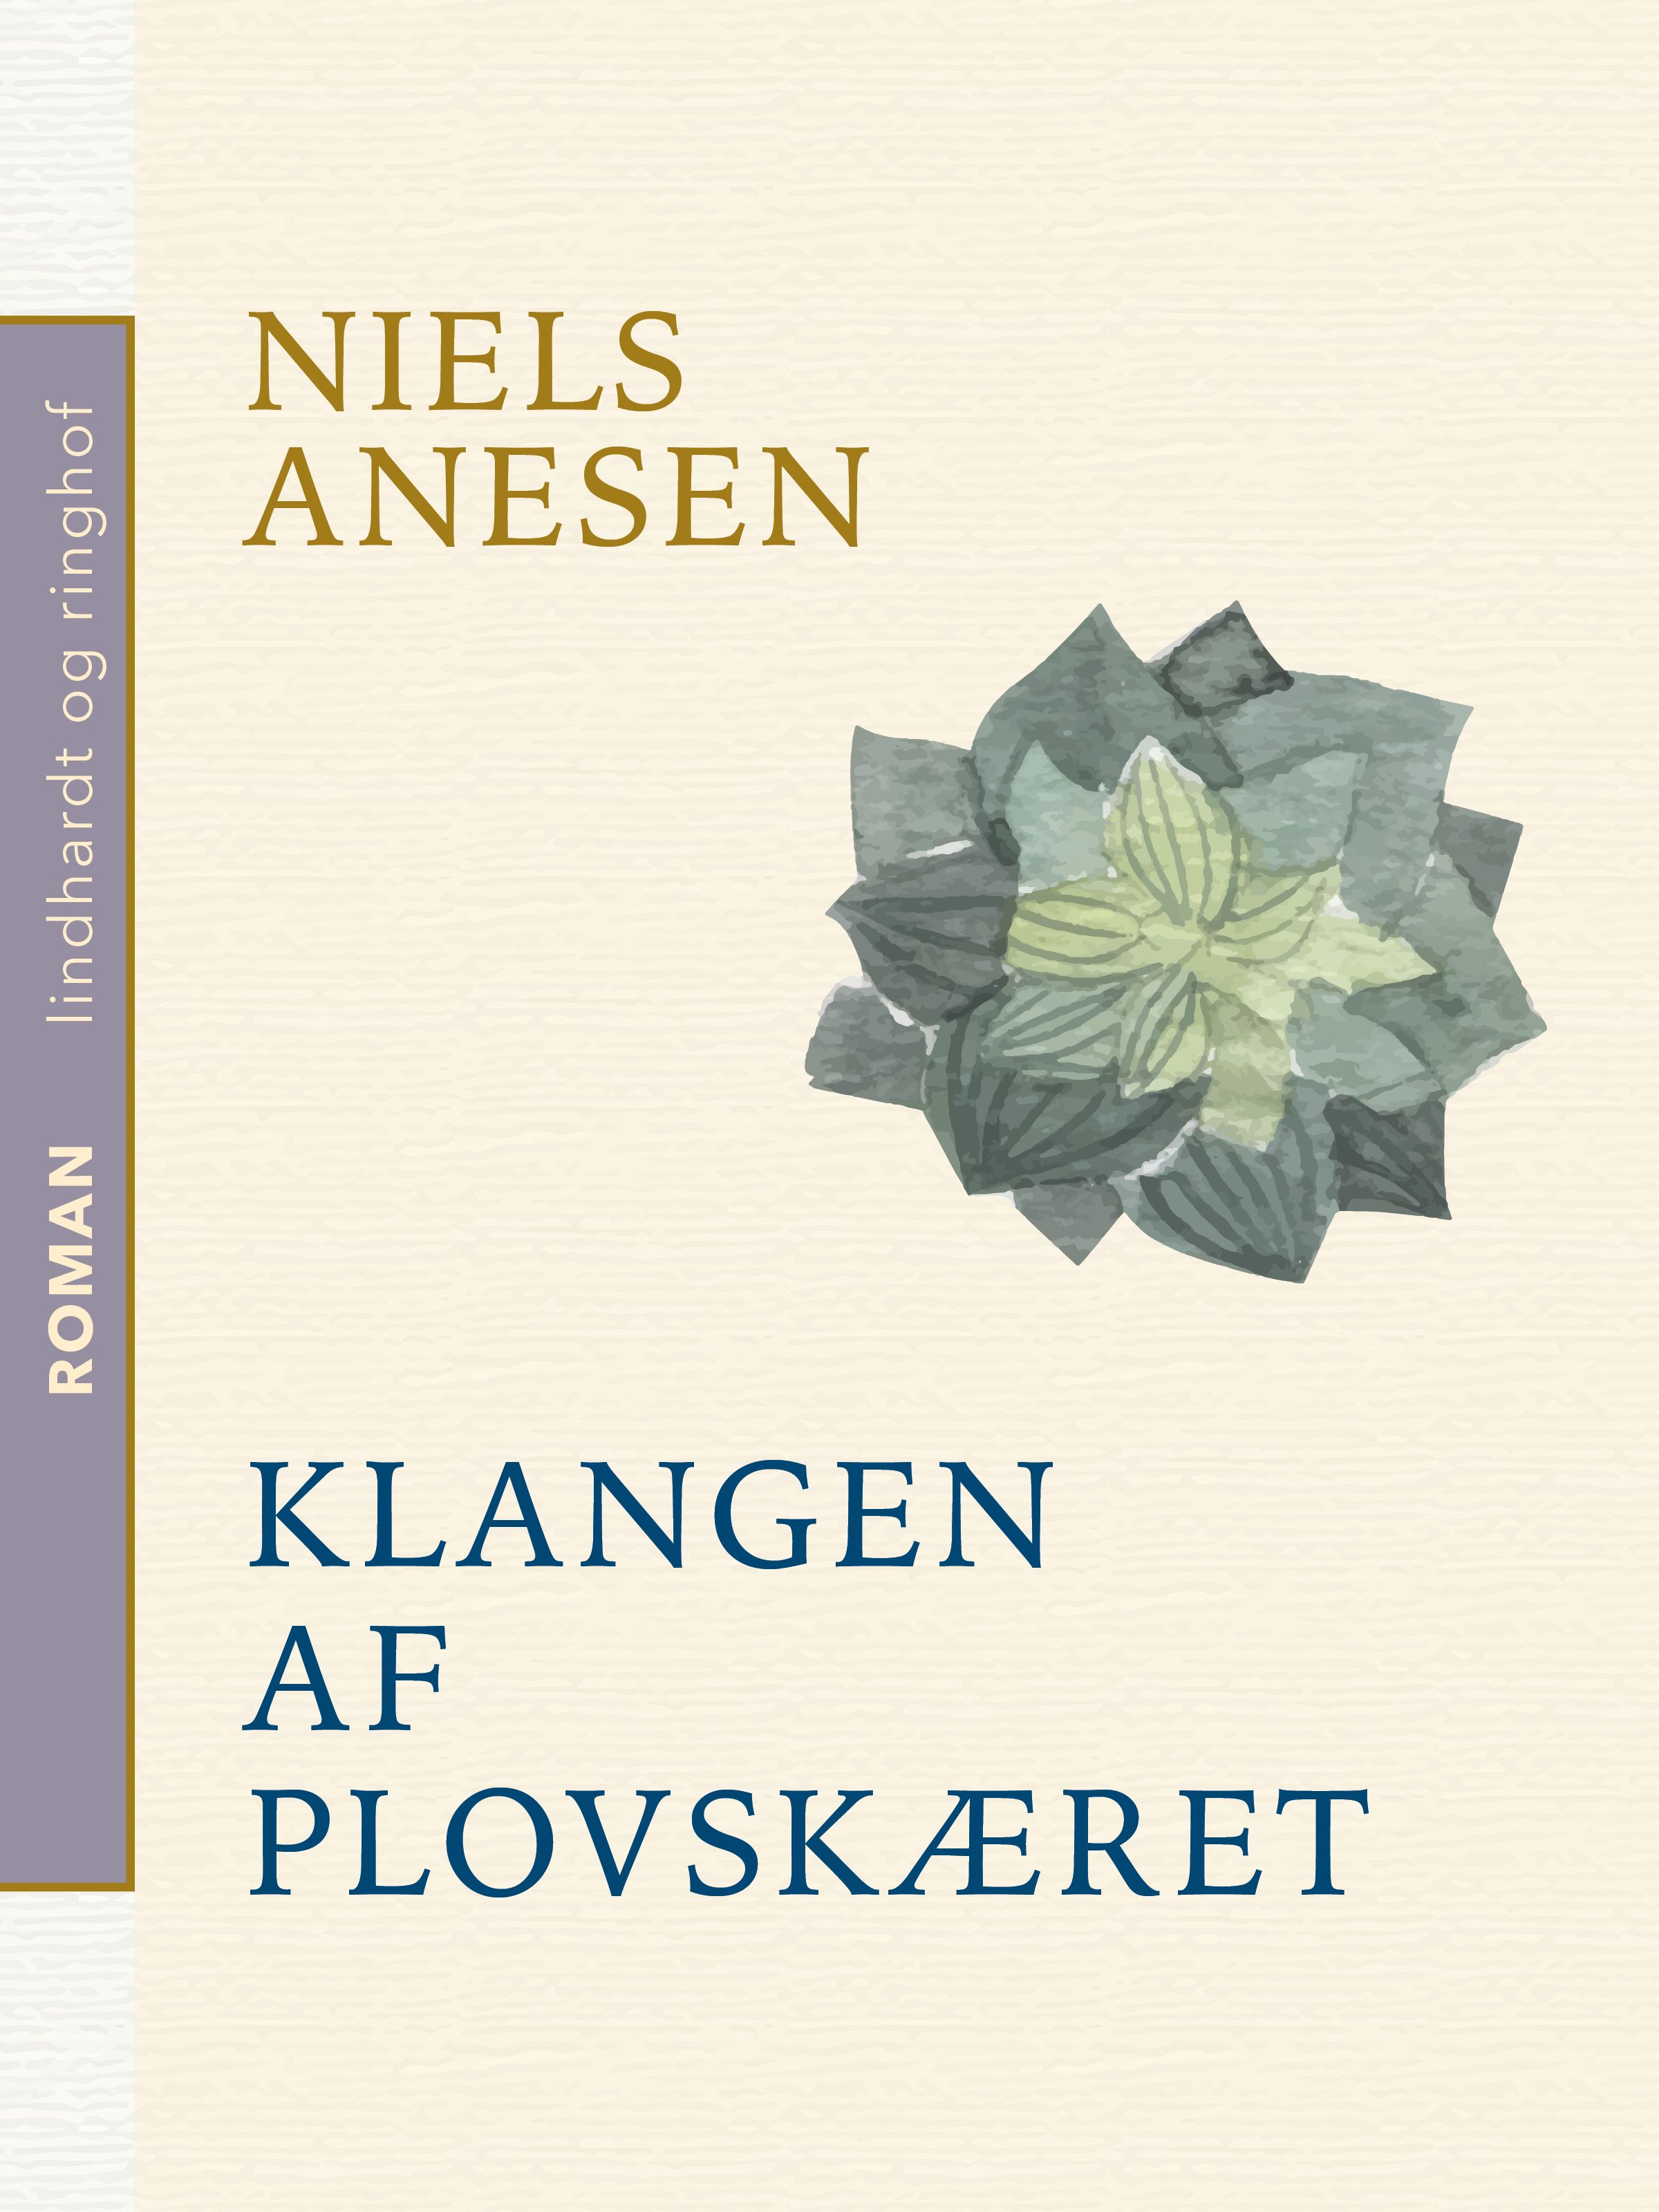 Klangen af plovskæret, e-bok av Niels Anesen